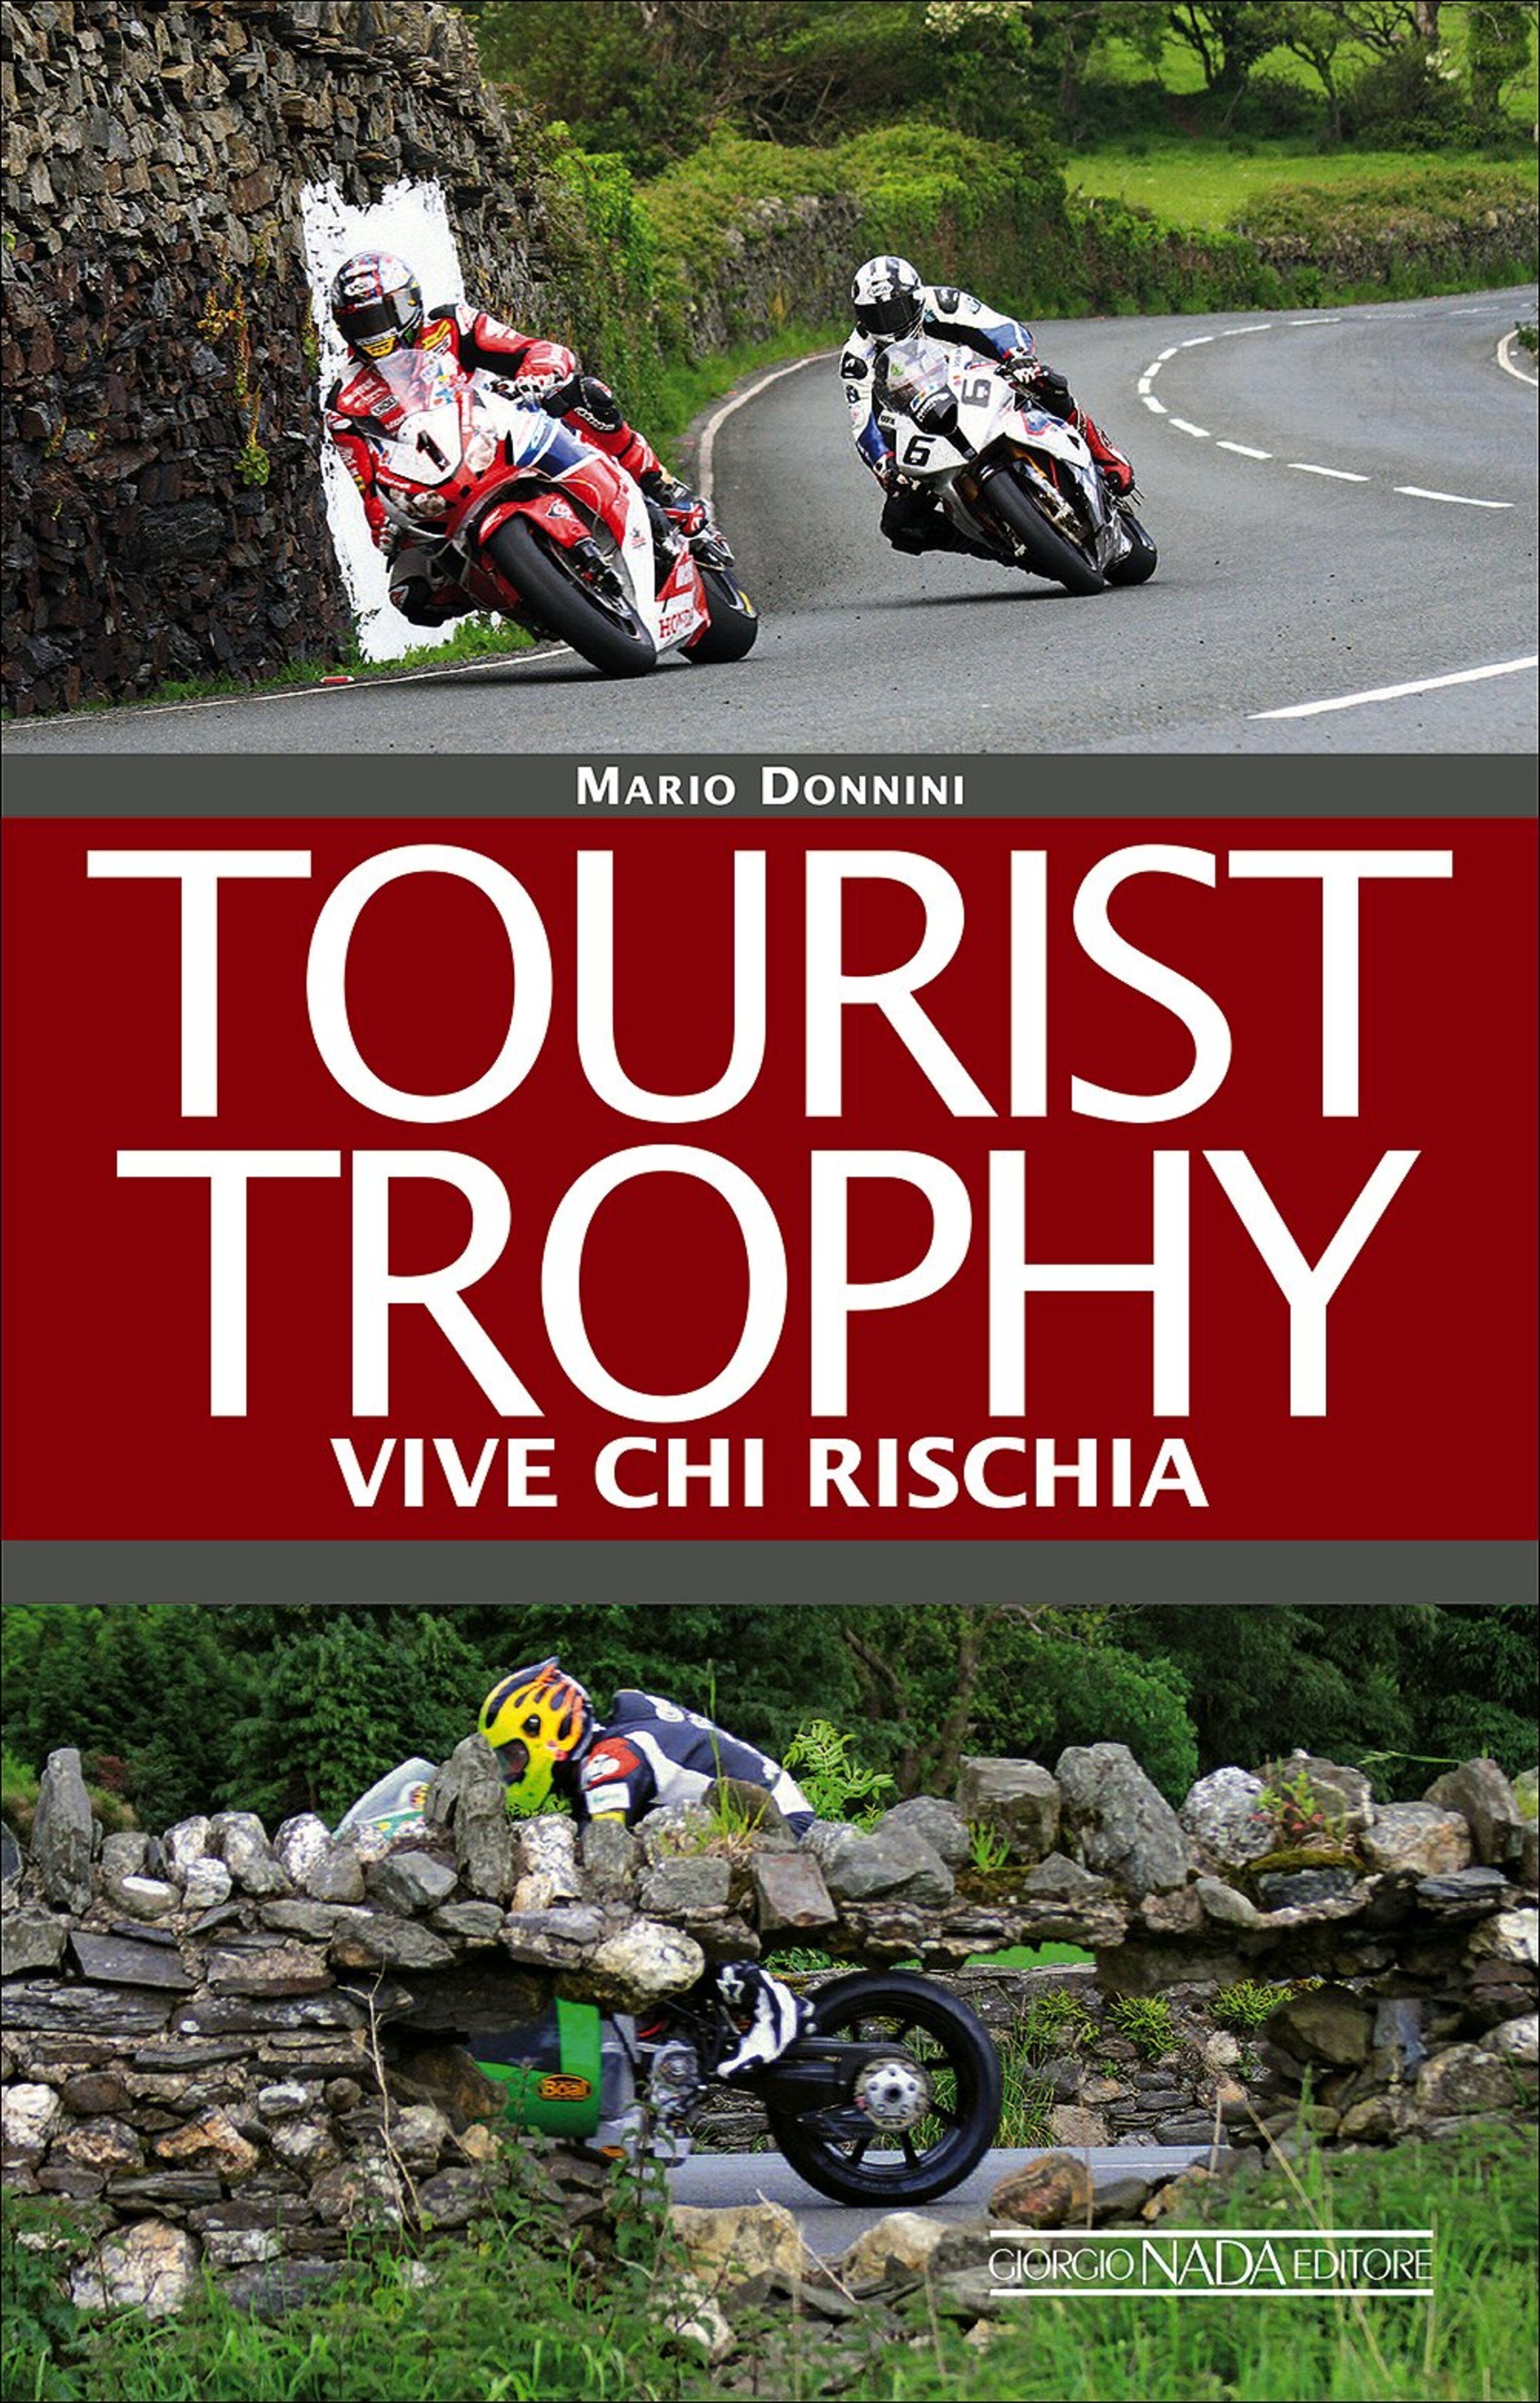 Libri per motociclisti: &quot;Tourist Trophy. Vive chi rischia&quot;